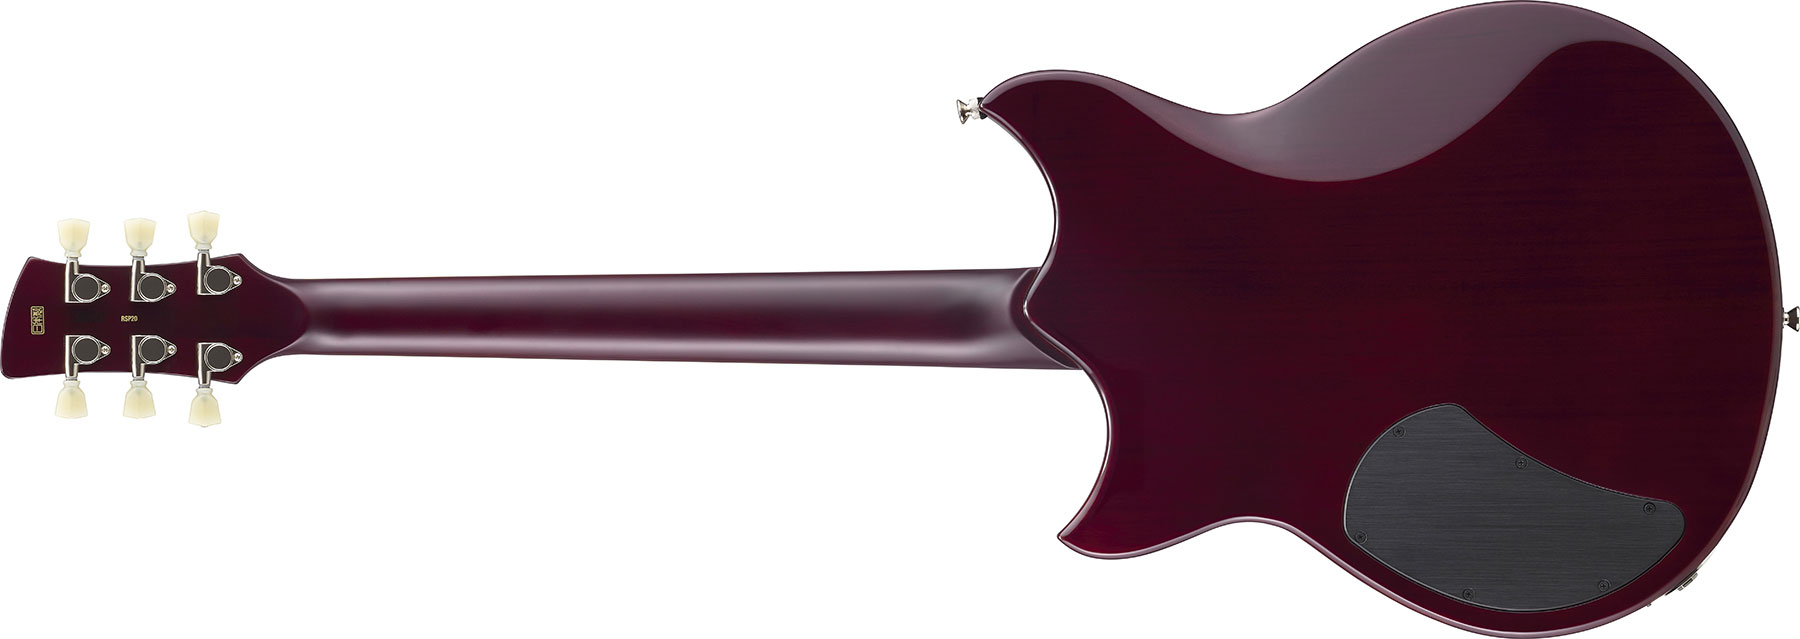 Yamaha Rss02t Revstar Standard 2p90 Ht Rw - Swift Blue - Double Cut E-Gitarre - Variation 2